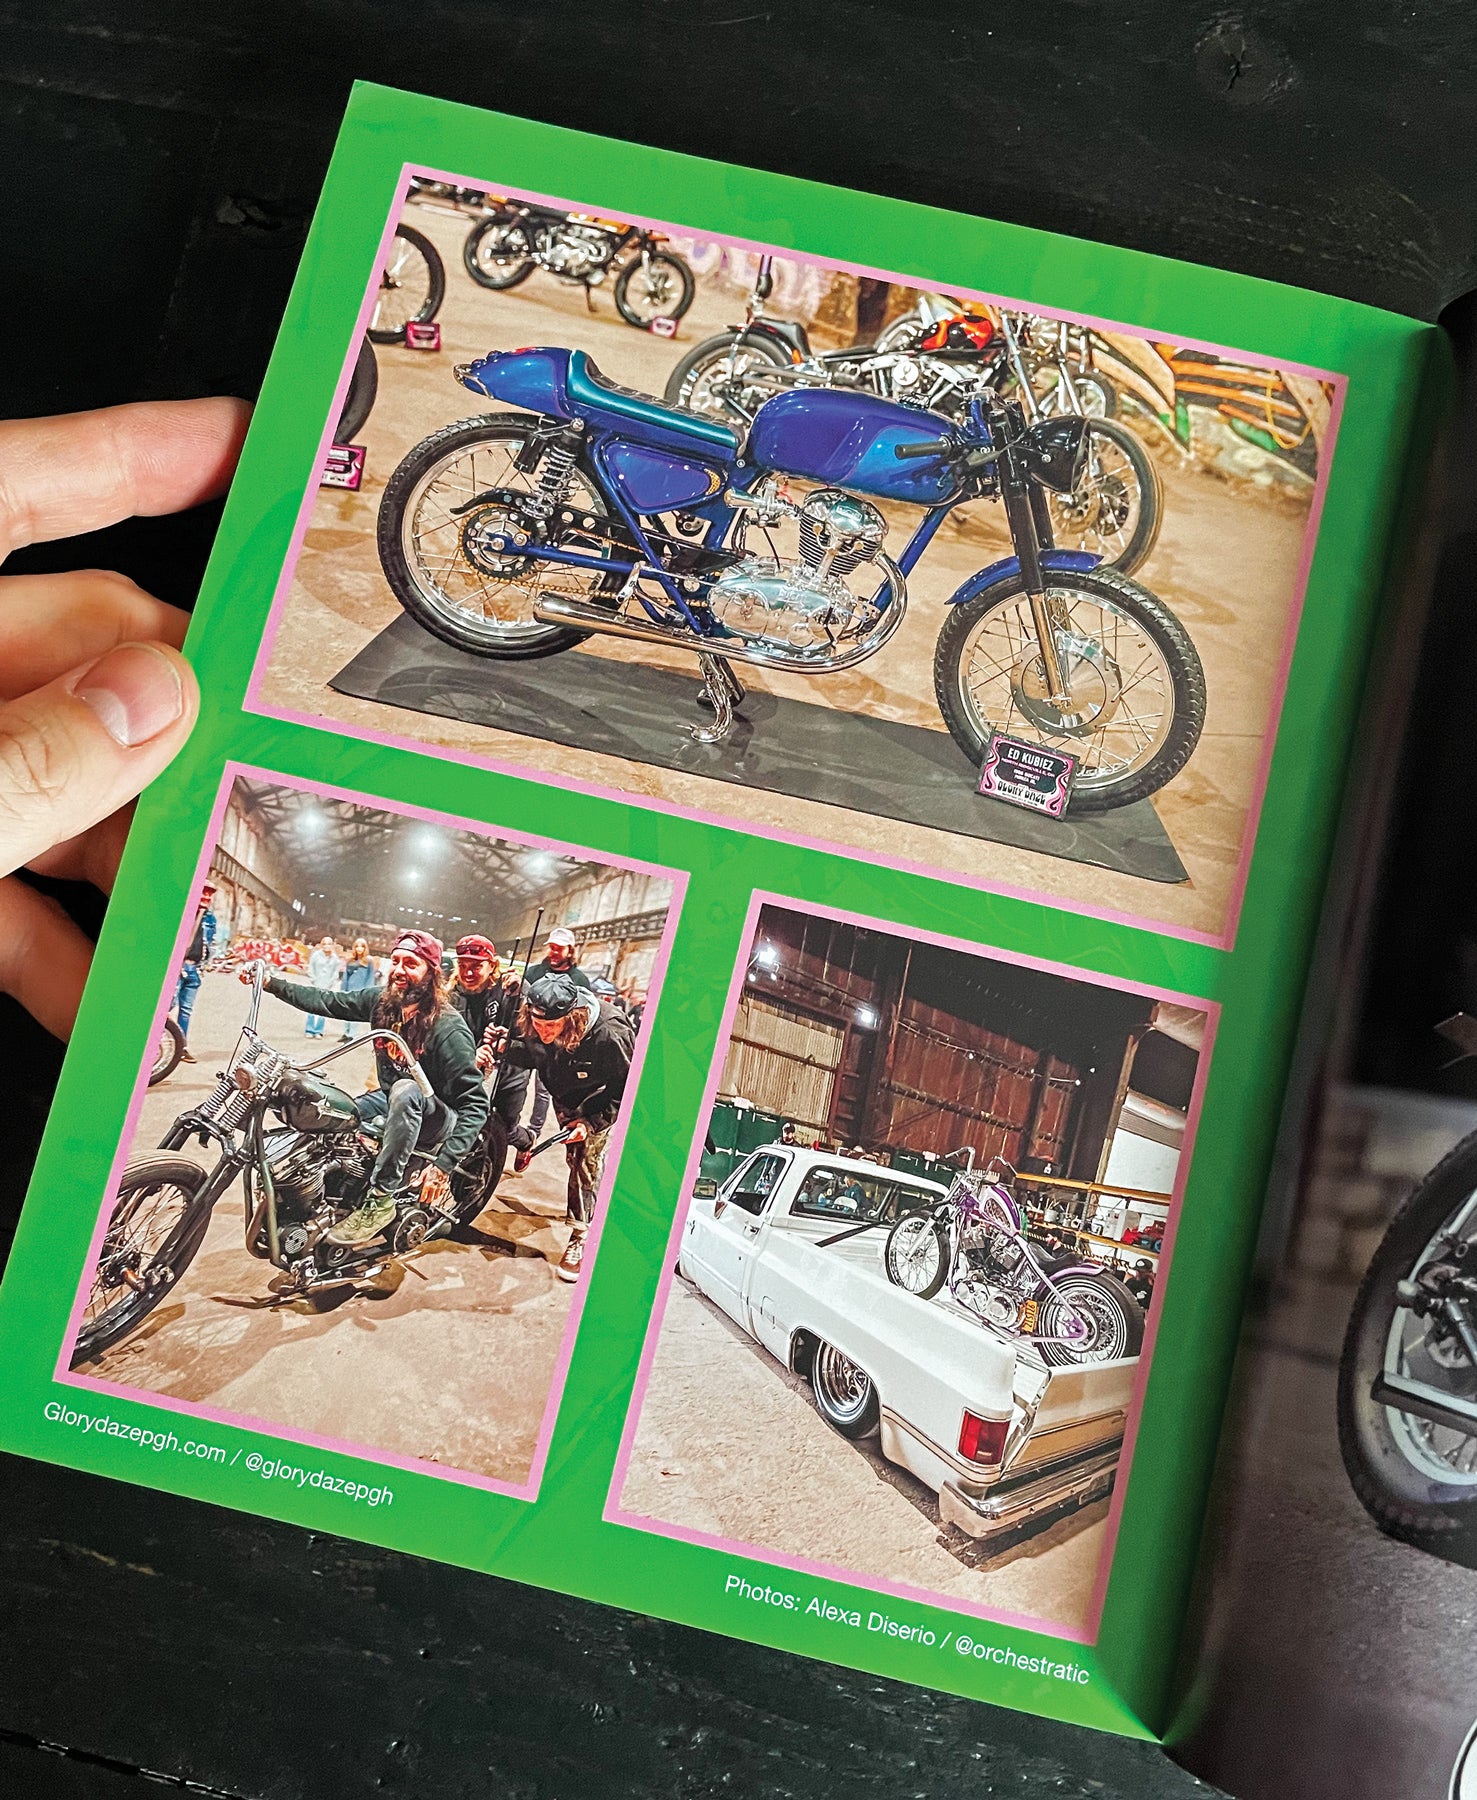 Dice magazine glory daze motorcycle show issue 102